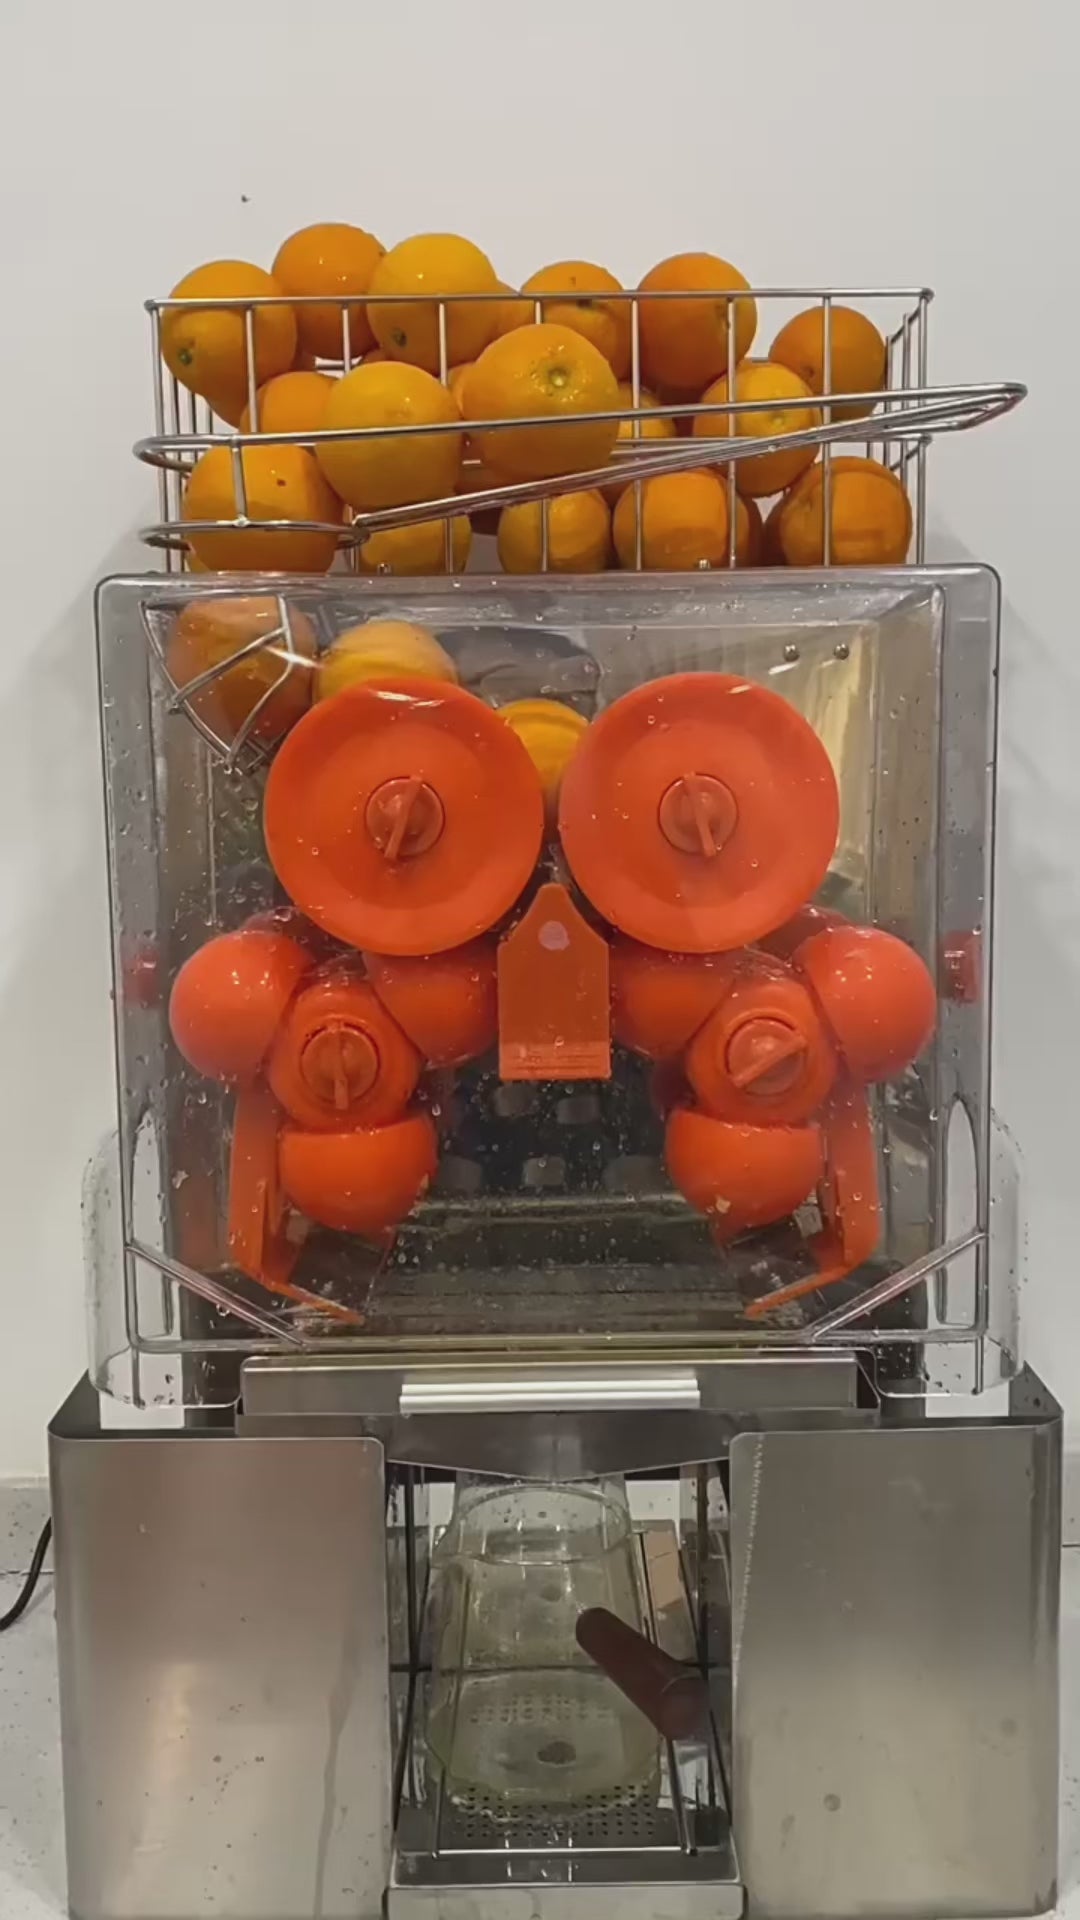 Exprimidor de naranjas automatico exmex – Exmex shopping